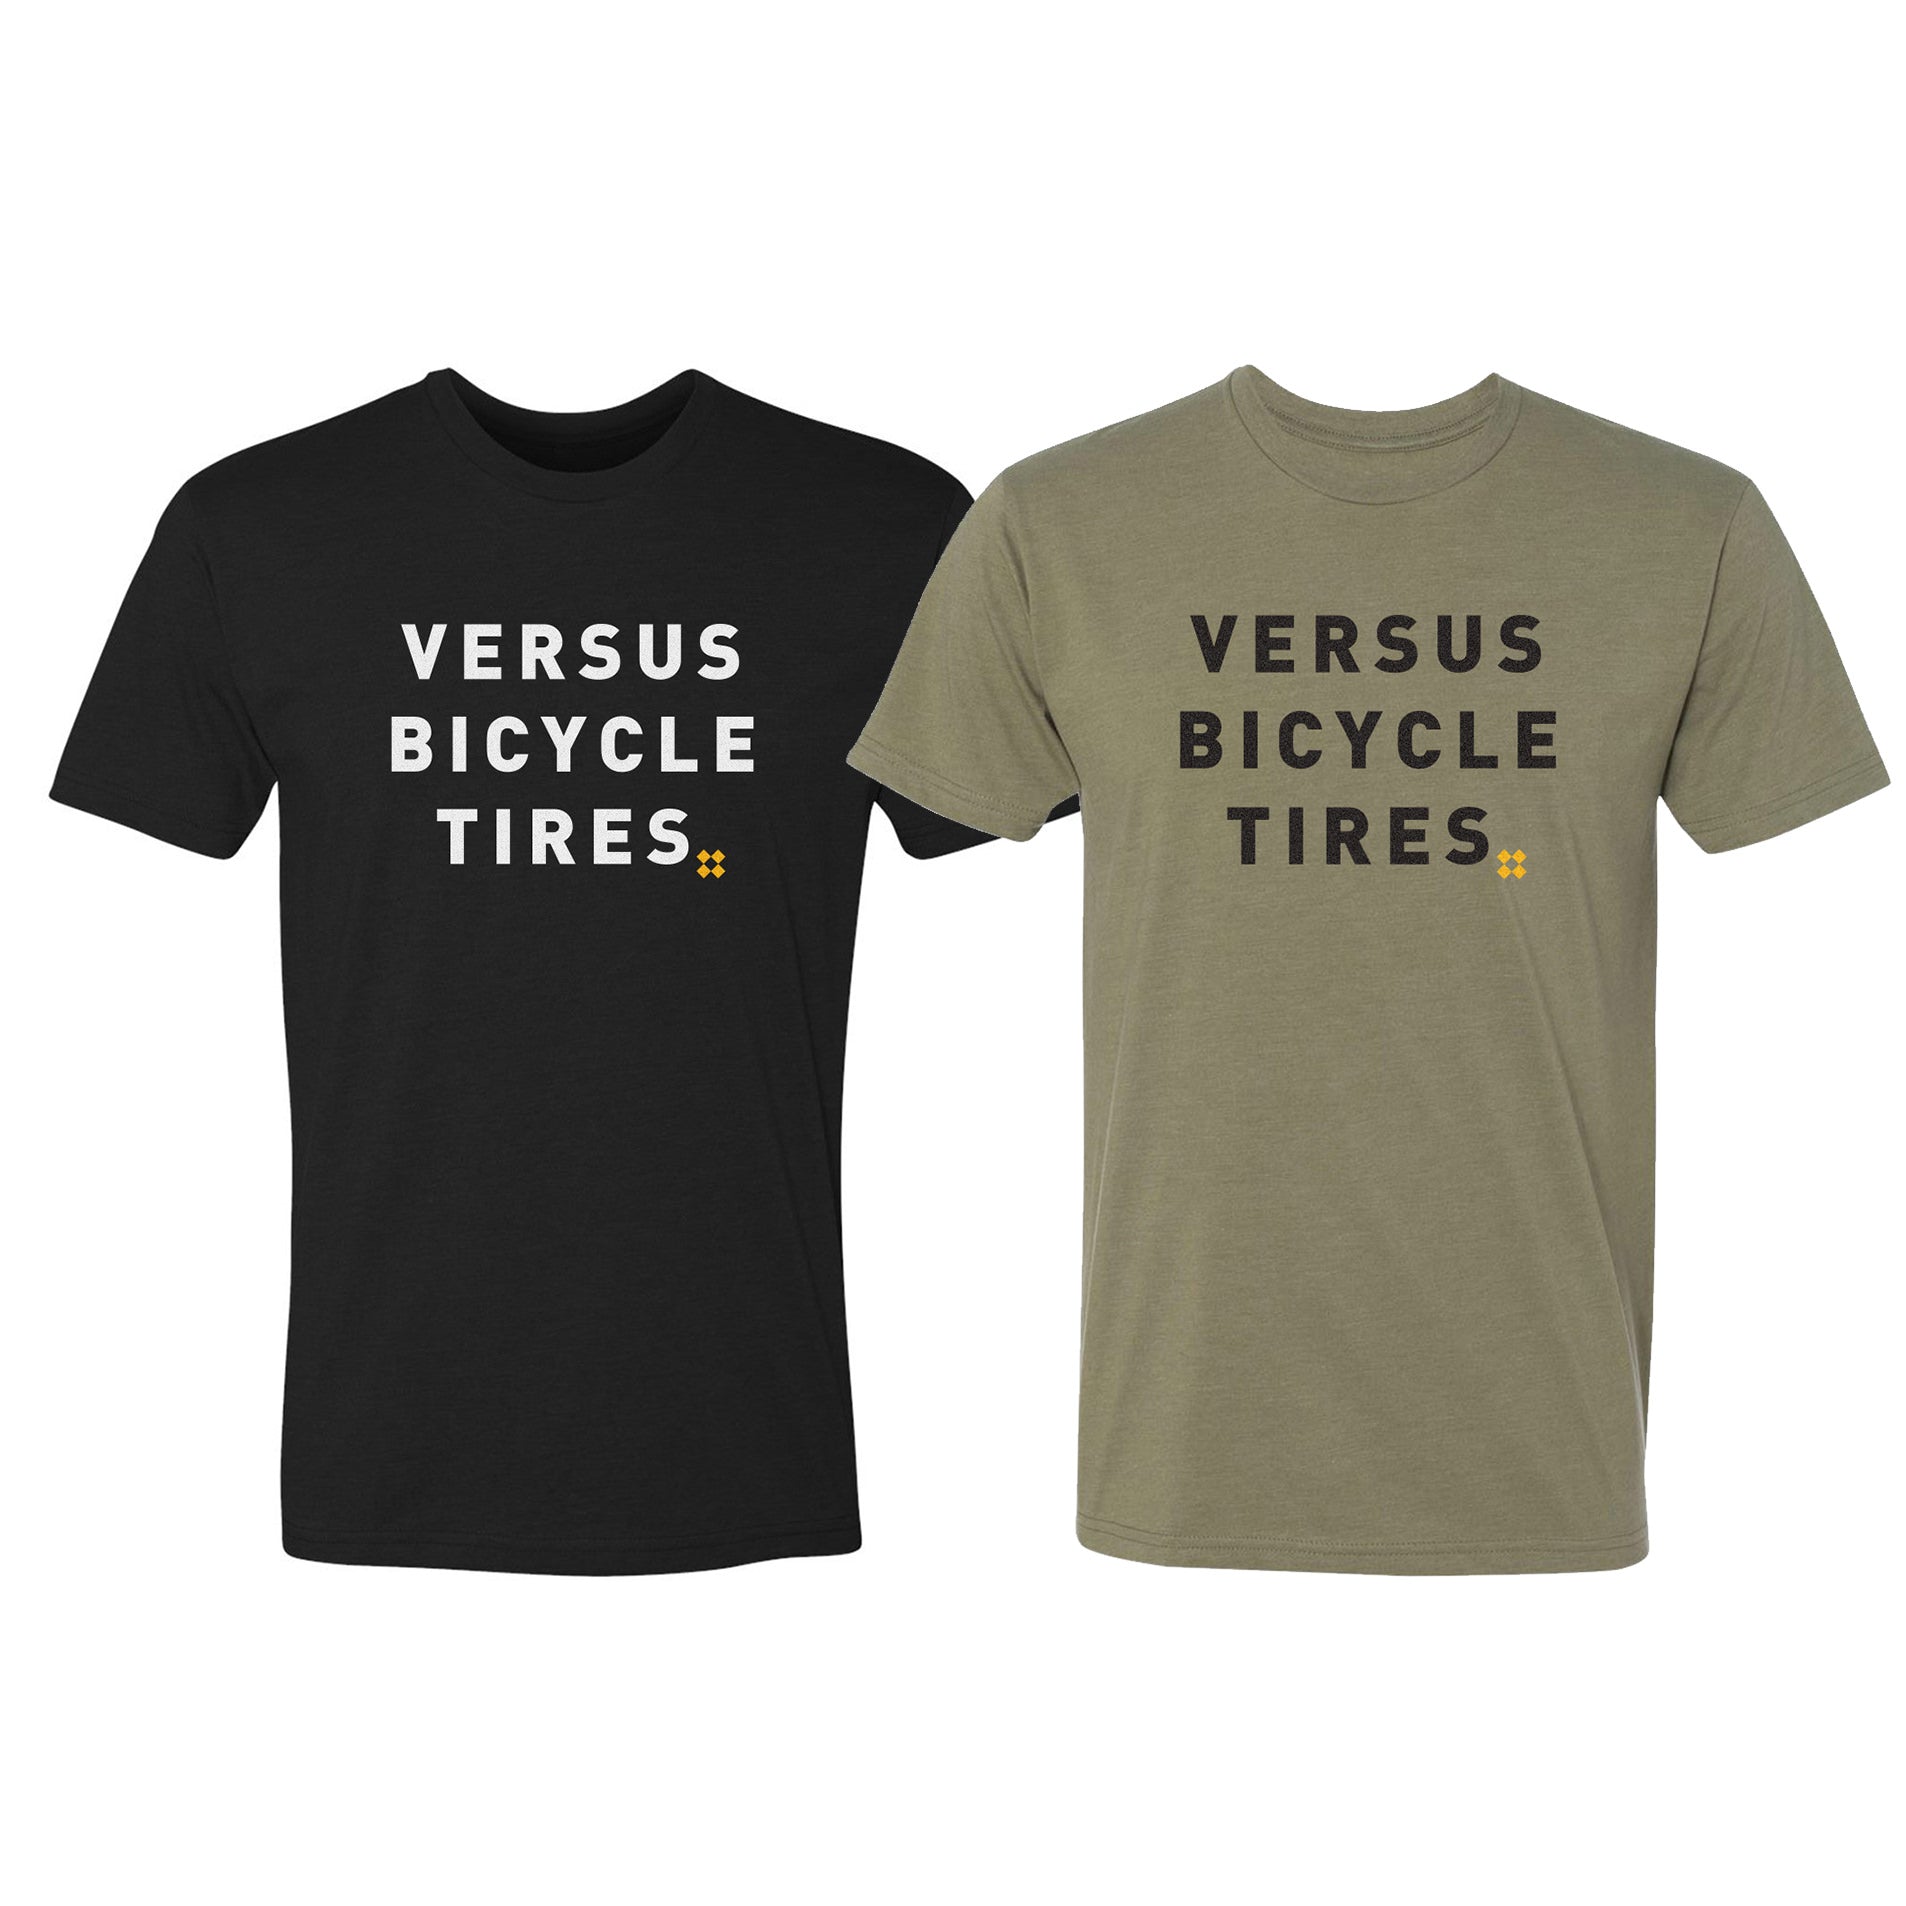 Versus Tires Text t-shirt in black & olive colorways